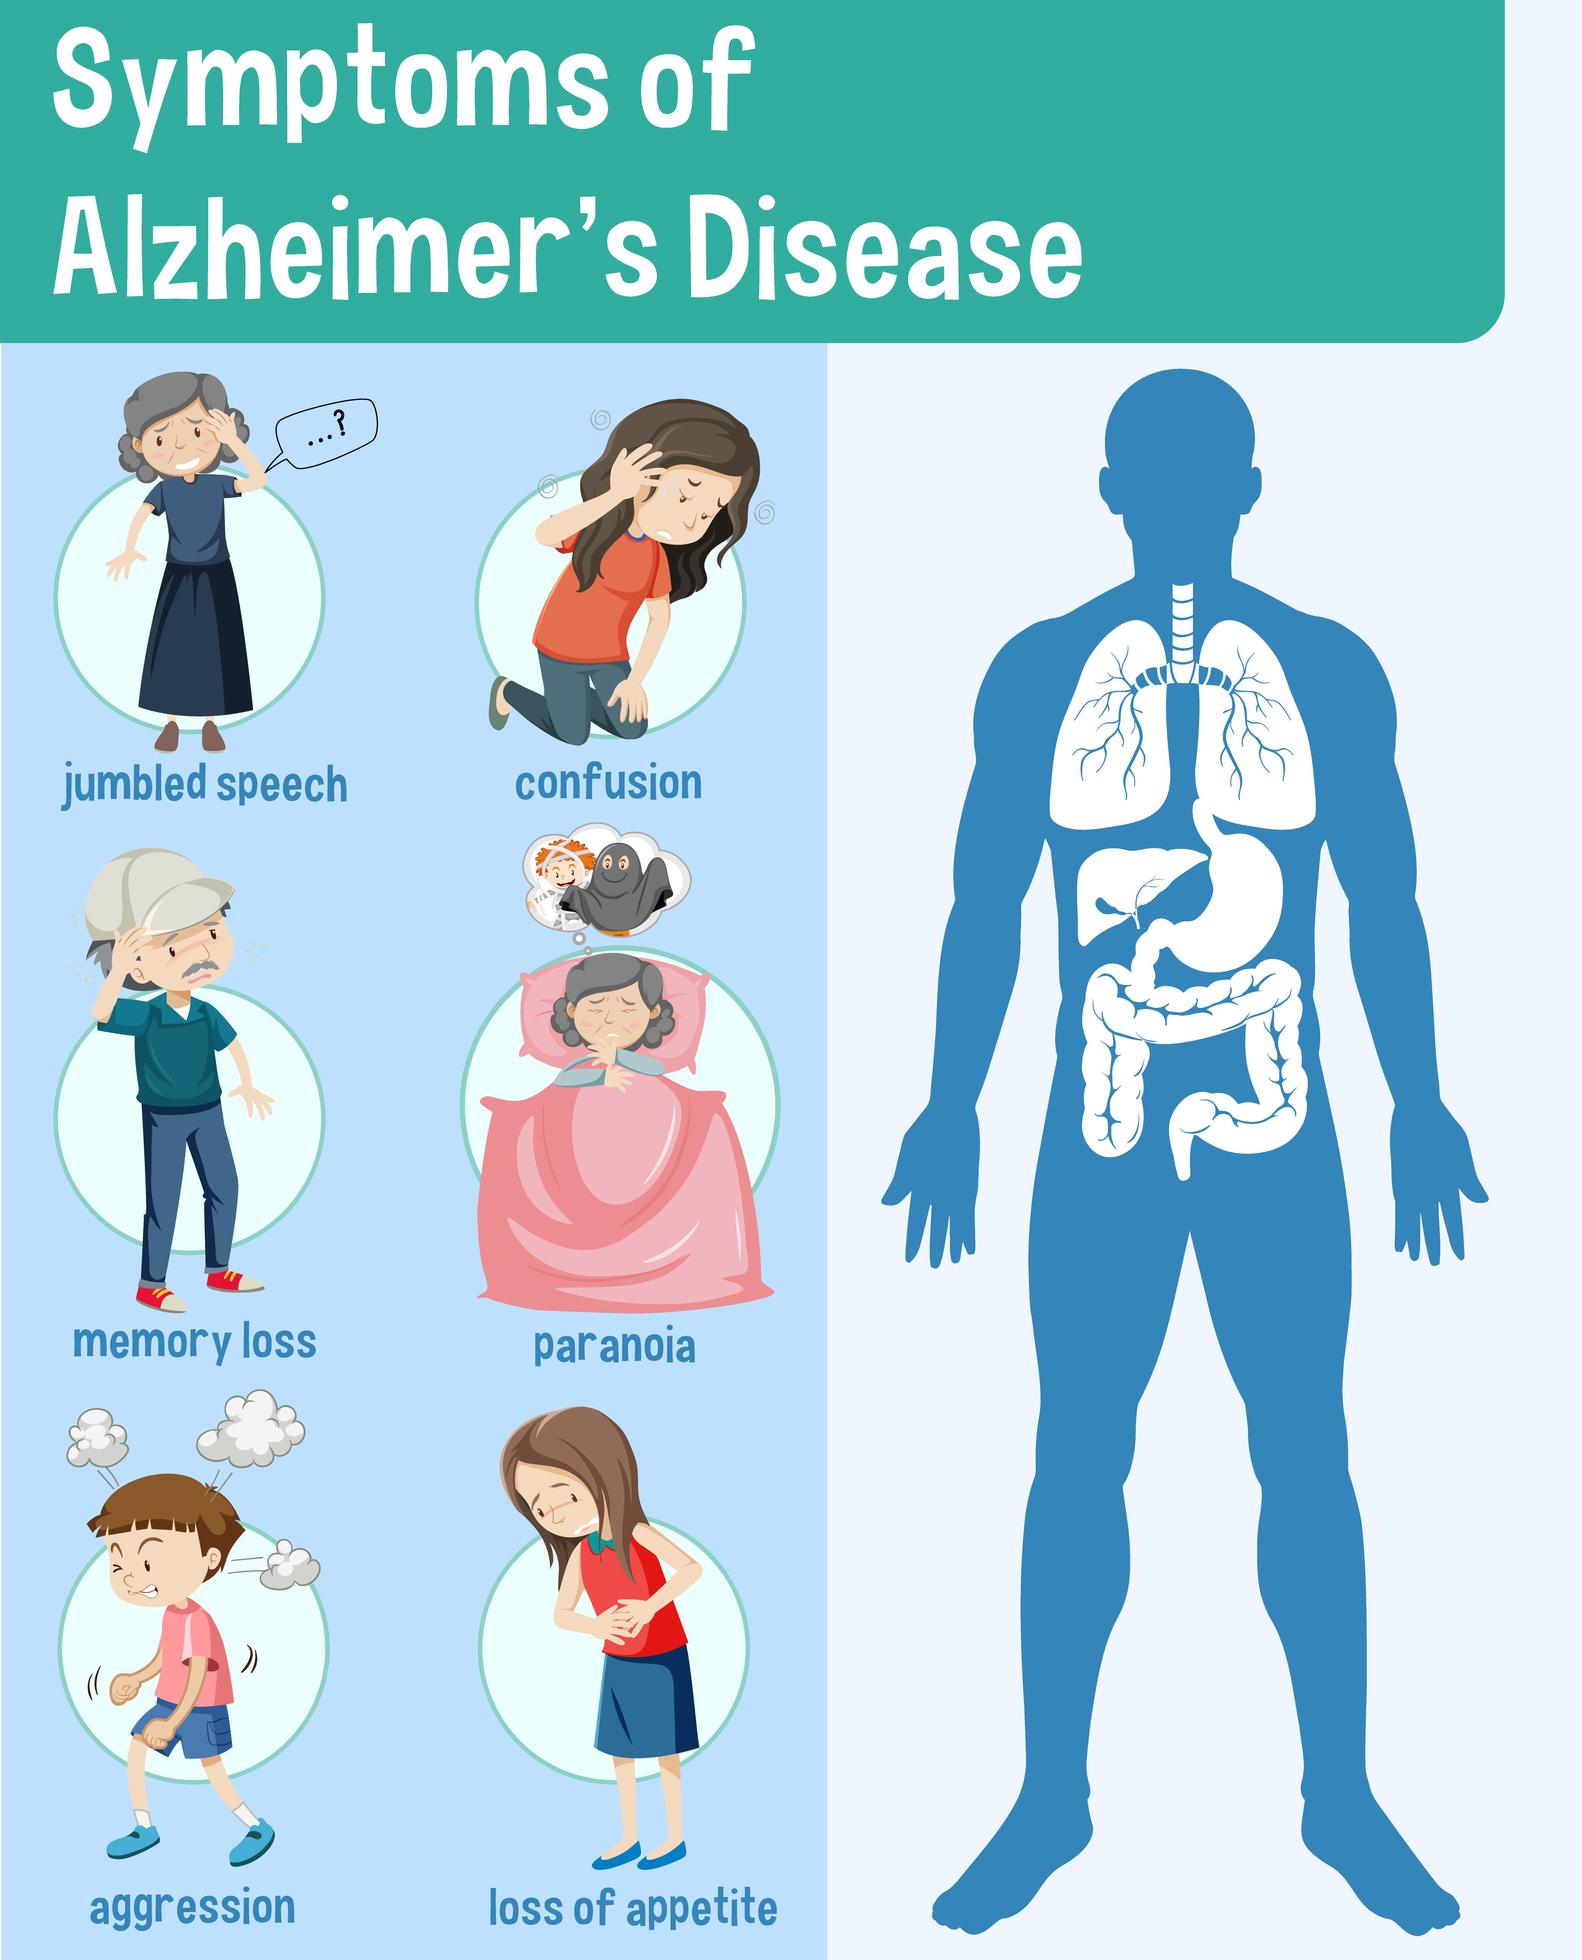 Symptoms of Alzheimer